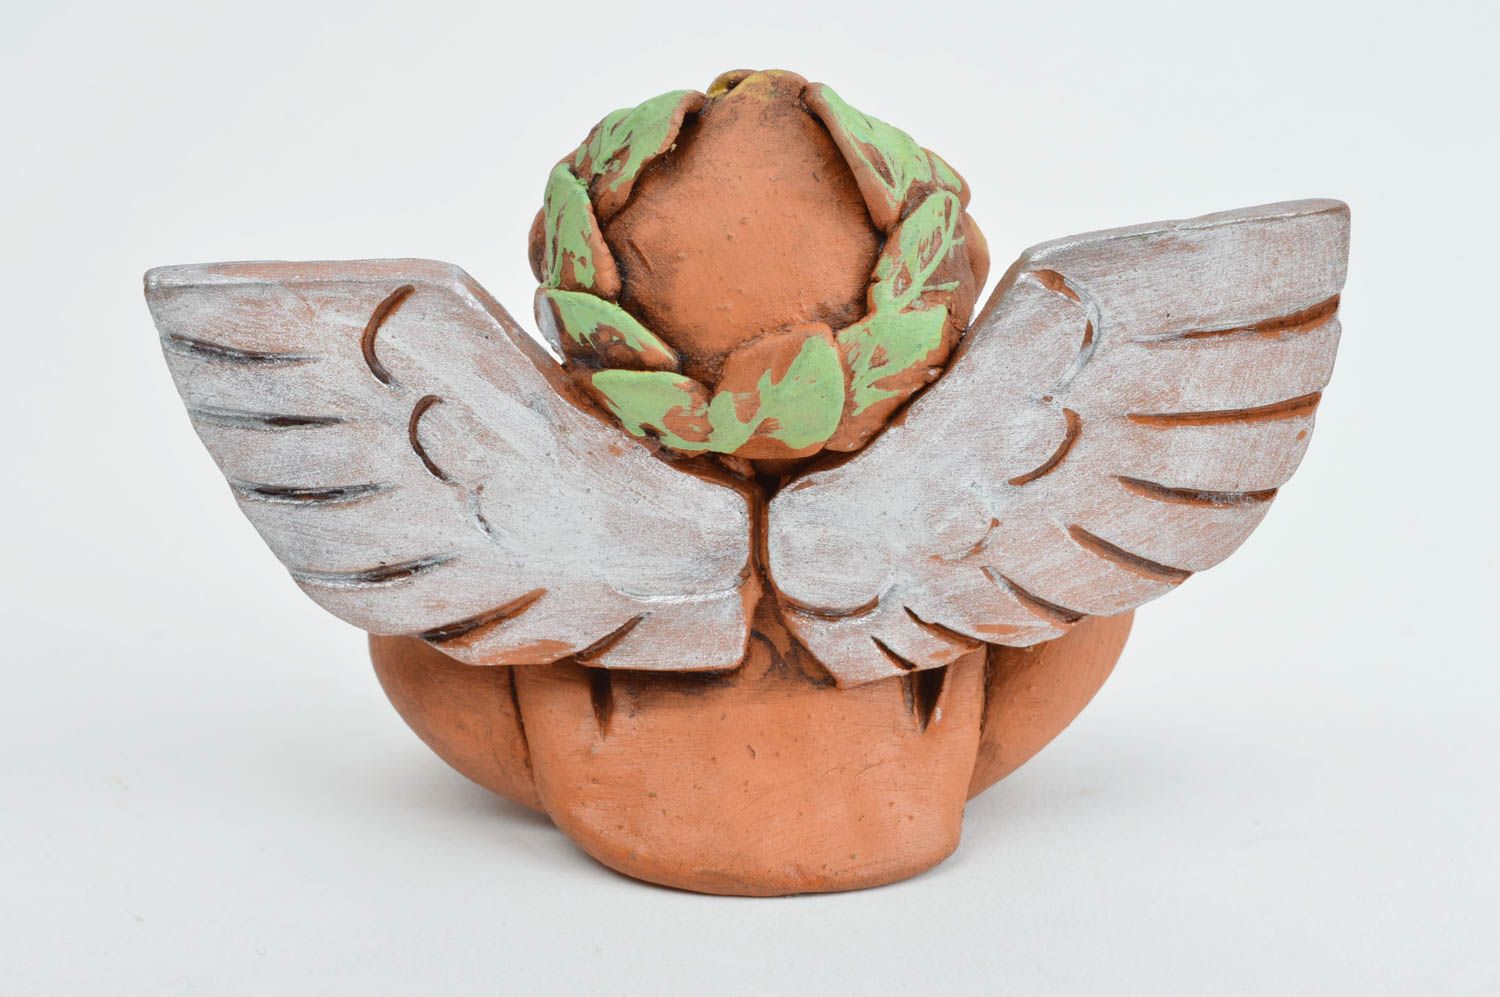 Handmade angel figurine ceramic figurine for decorative use only home decor photo 4